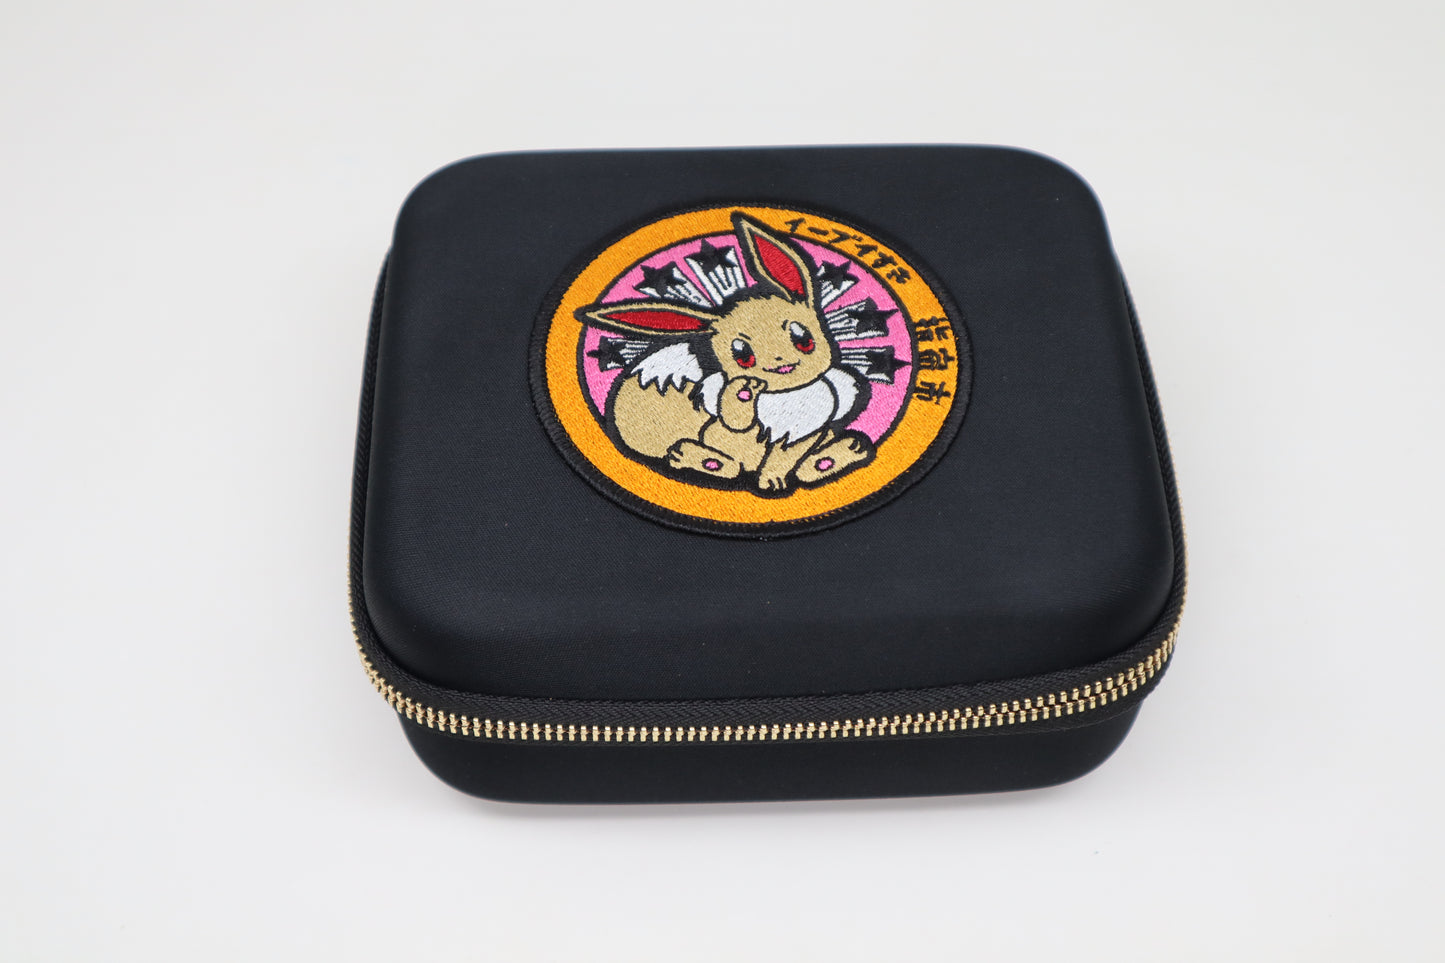 Custom TNC Case 3 (Eevee - Japanese High Quality Pokemon Patch)